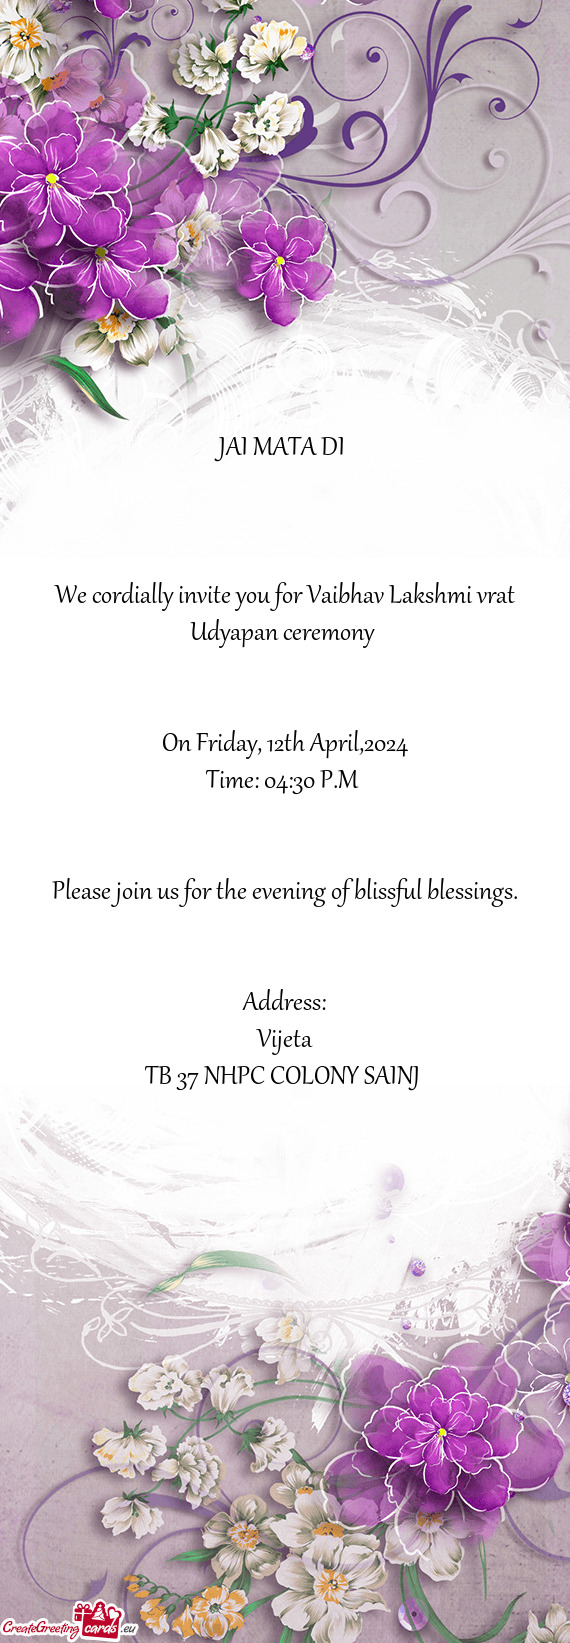 We cordially invite you for Vaibhav Lakshmi vrat Udyapan ceremony